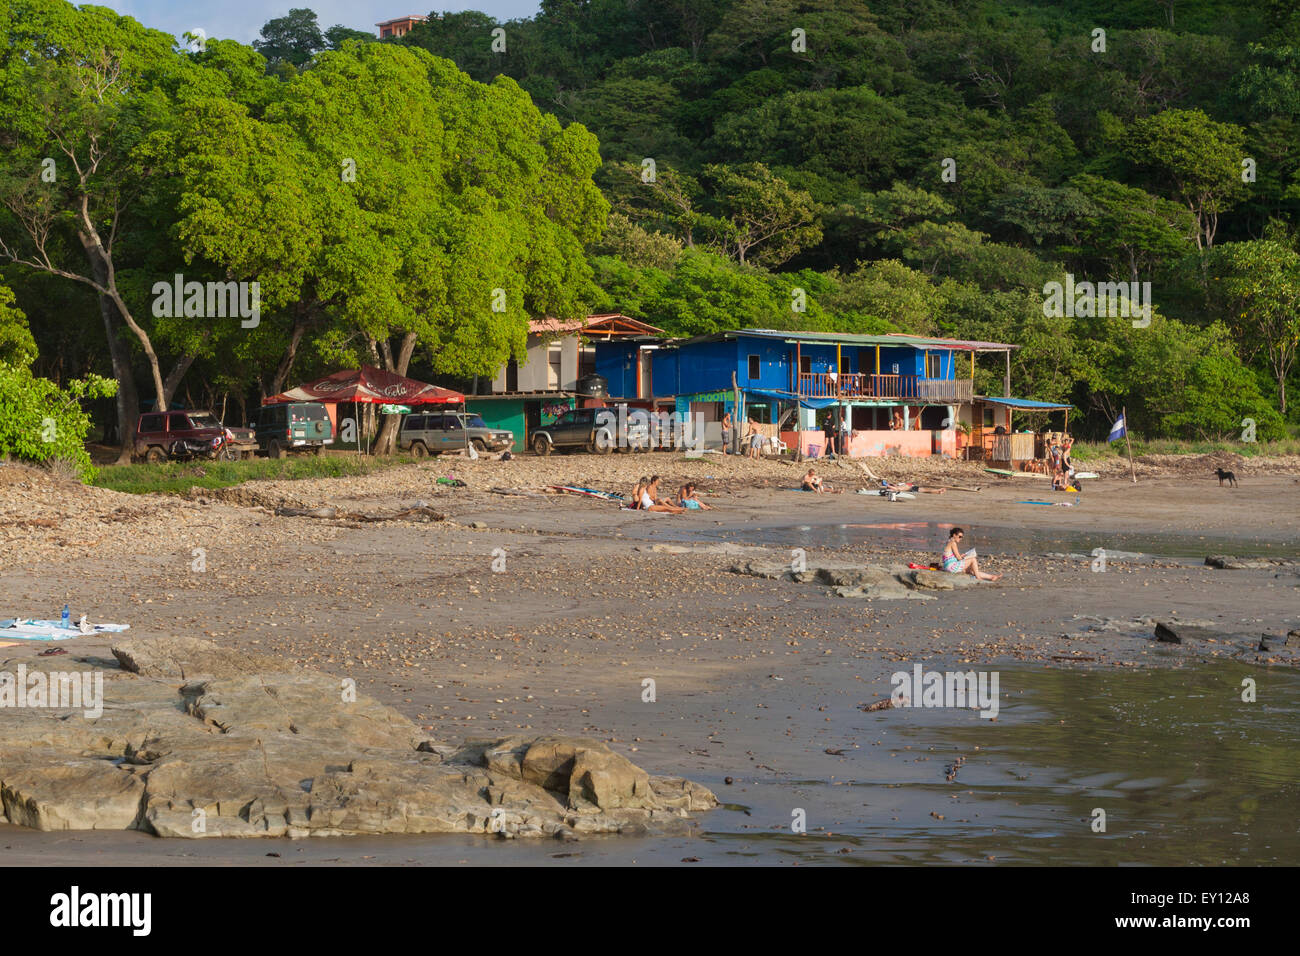 Buena Vista Surf Club à Playa Maderas, Nicaragua Banque D'Images